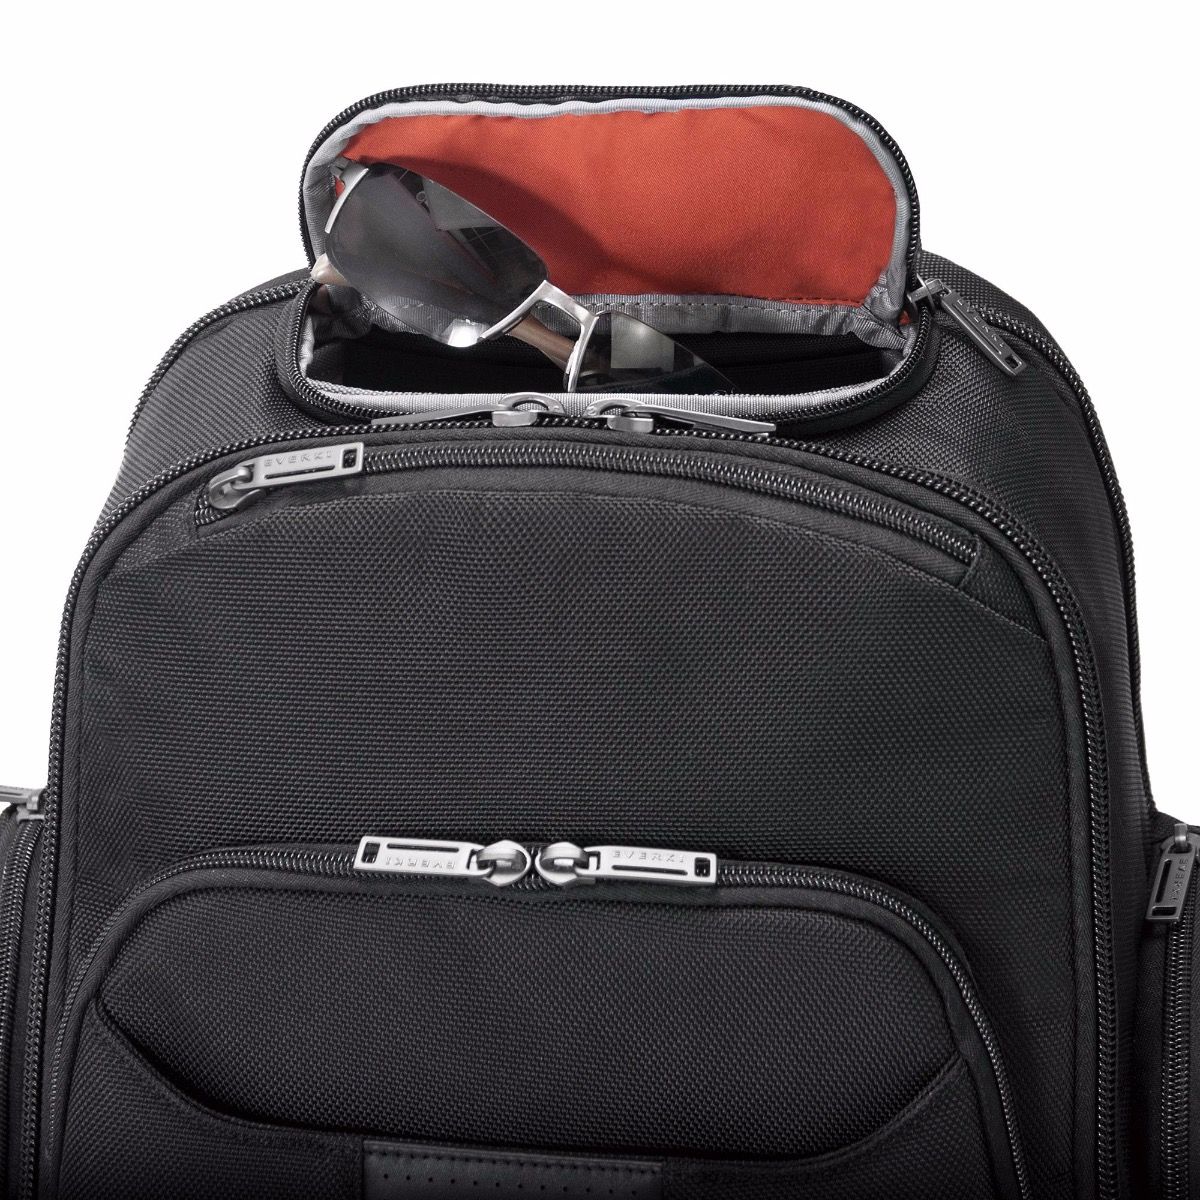 everki premium travel friendly laptop backpack (versa 2)